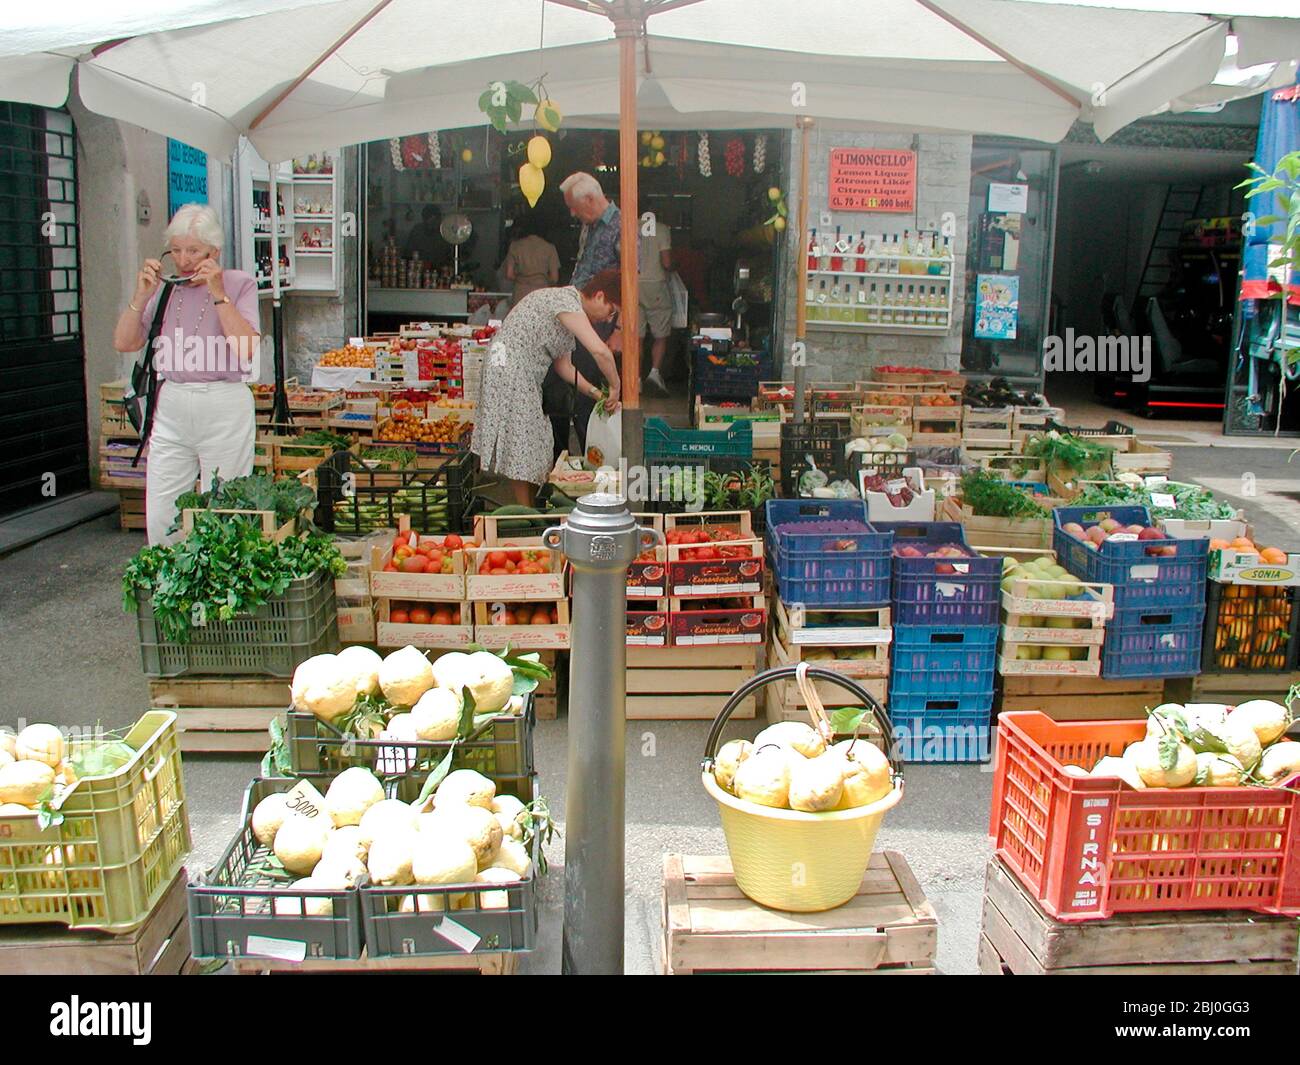 Frisches Gemüse in Boxen unter Sonnenschirmen vor dem Laden in Amalfi, Italien - Stockfoto